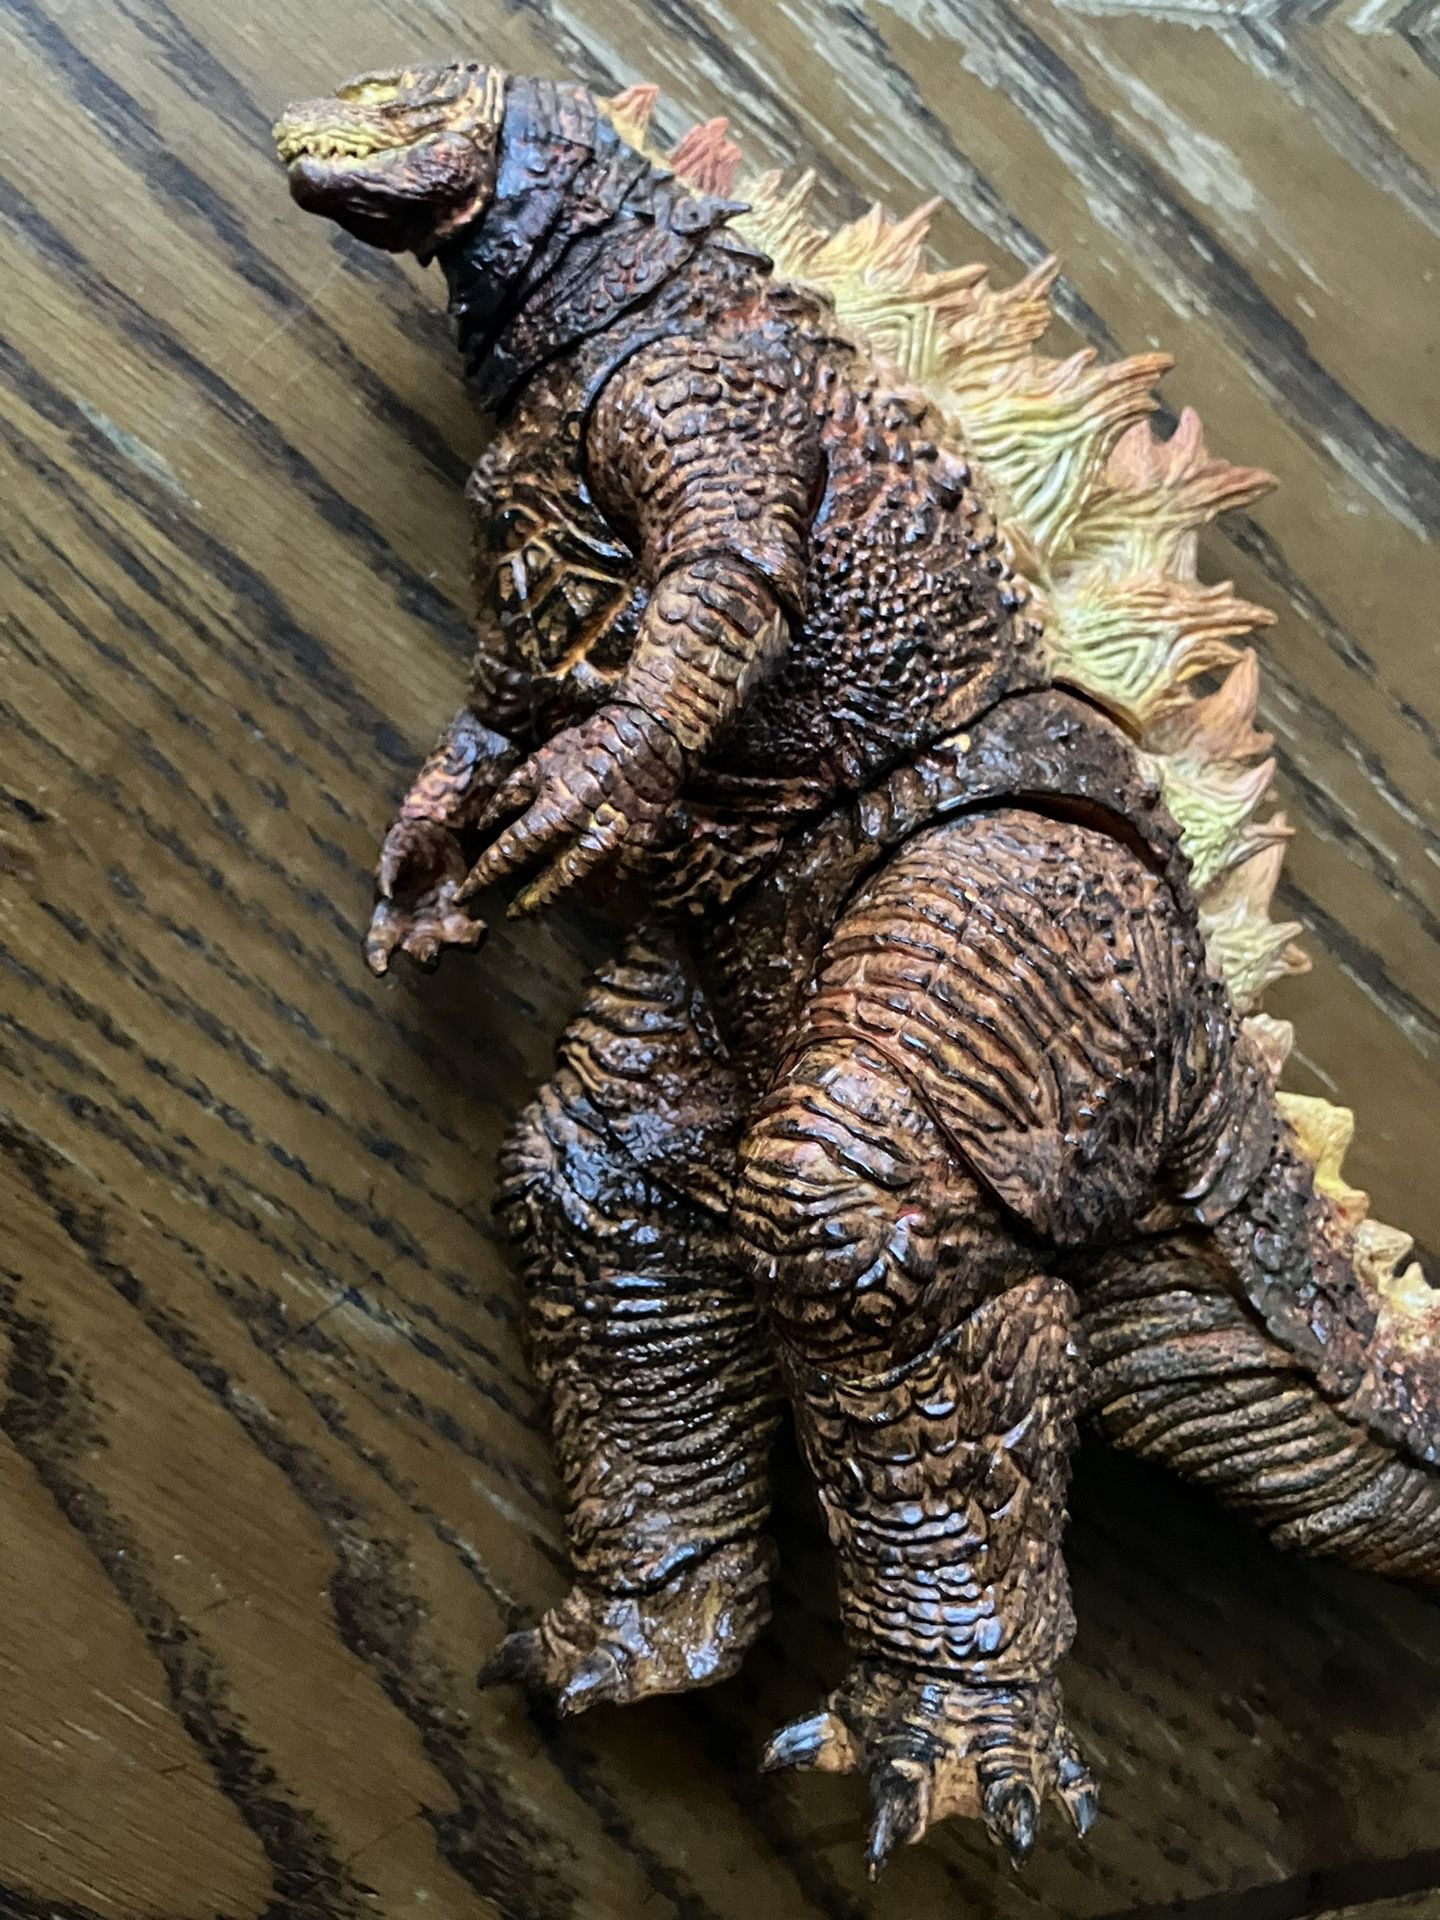 Hiya Toys KOTM 2019: Burning Godzilla Figure Loose Great Condition Buy Now!